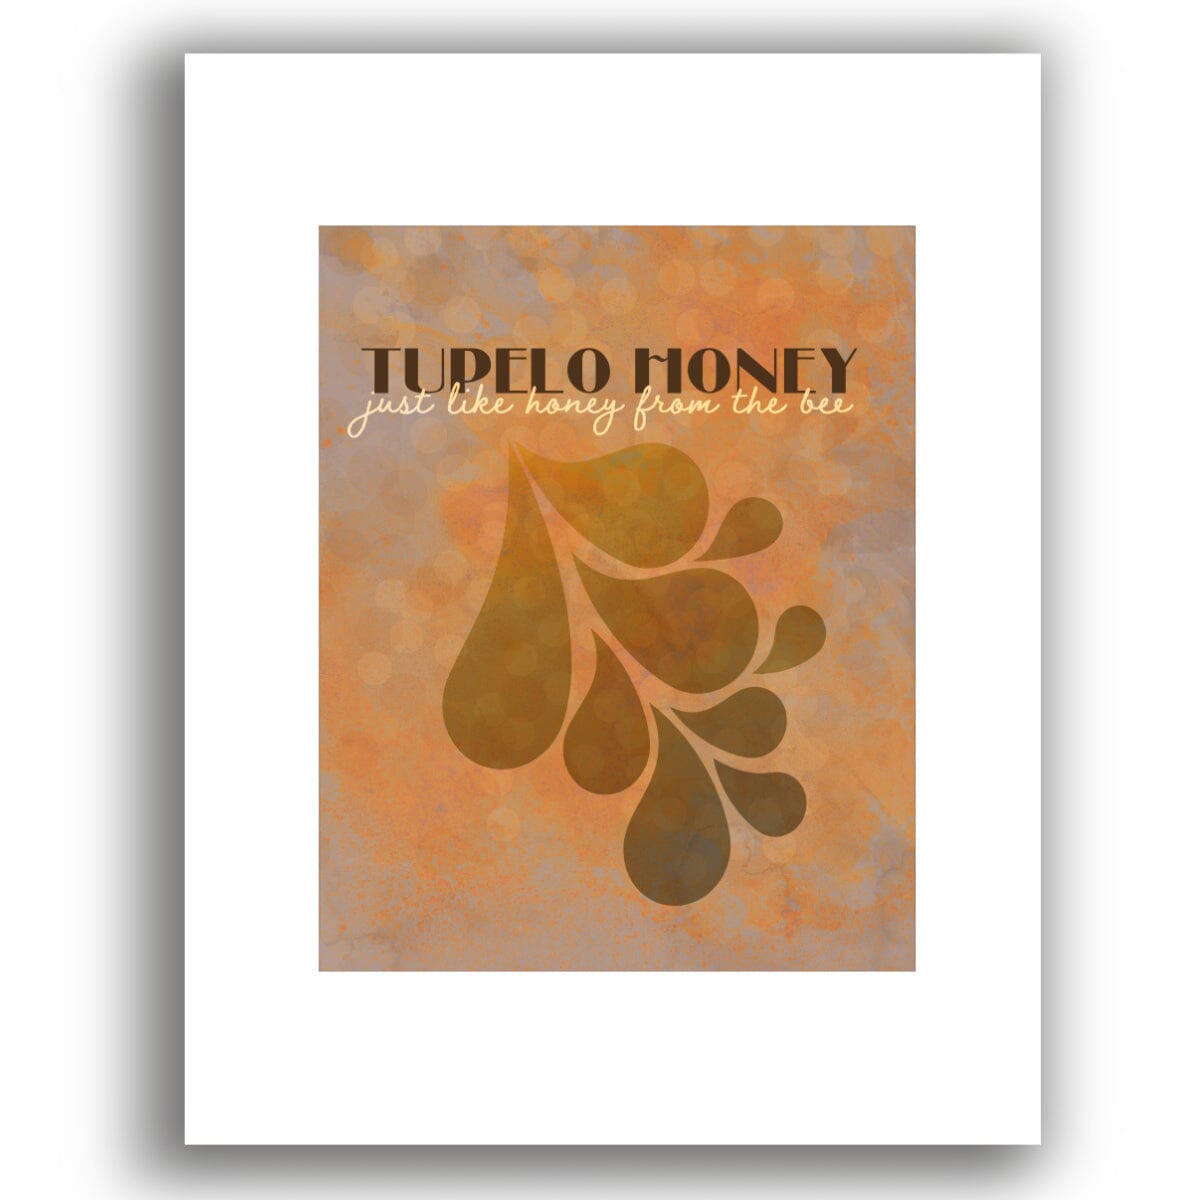 Tupelo Honey by Van Morrison - Rock Music Song Lyric Art Song Lyrics Art Song Lyrics Art 8x10 White Matted Print 